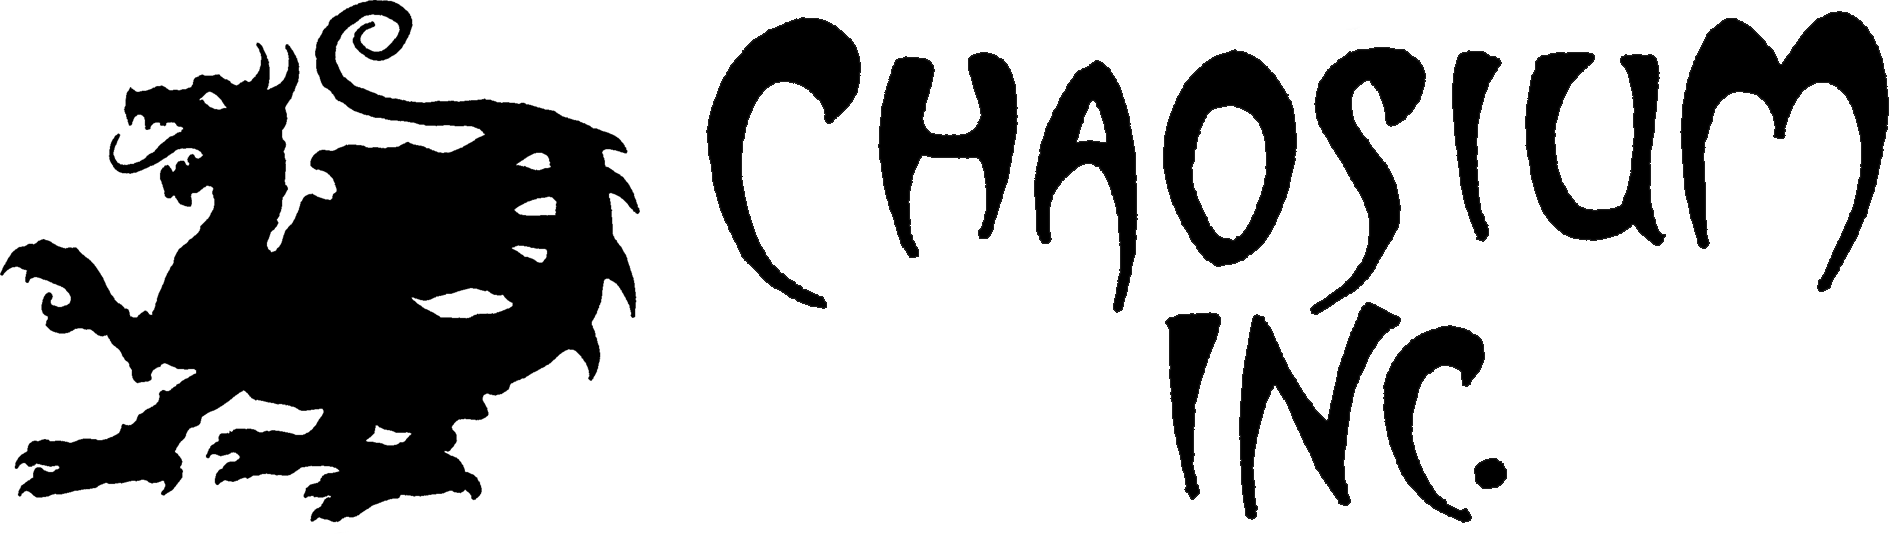 chaosium-horizontal-logo